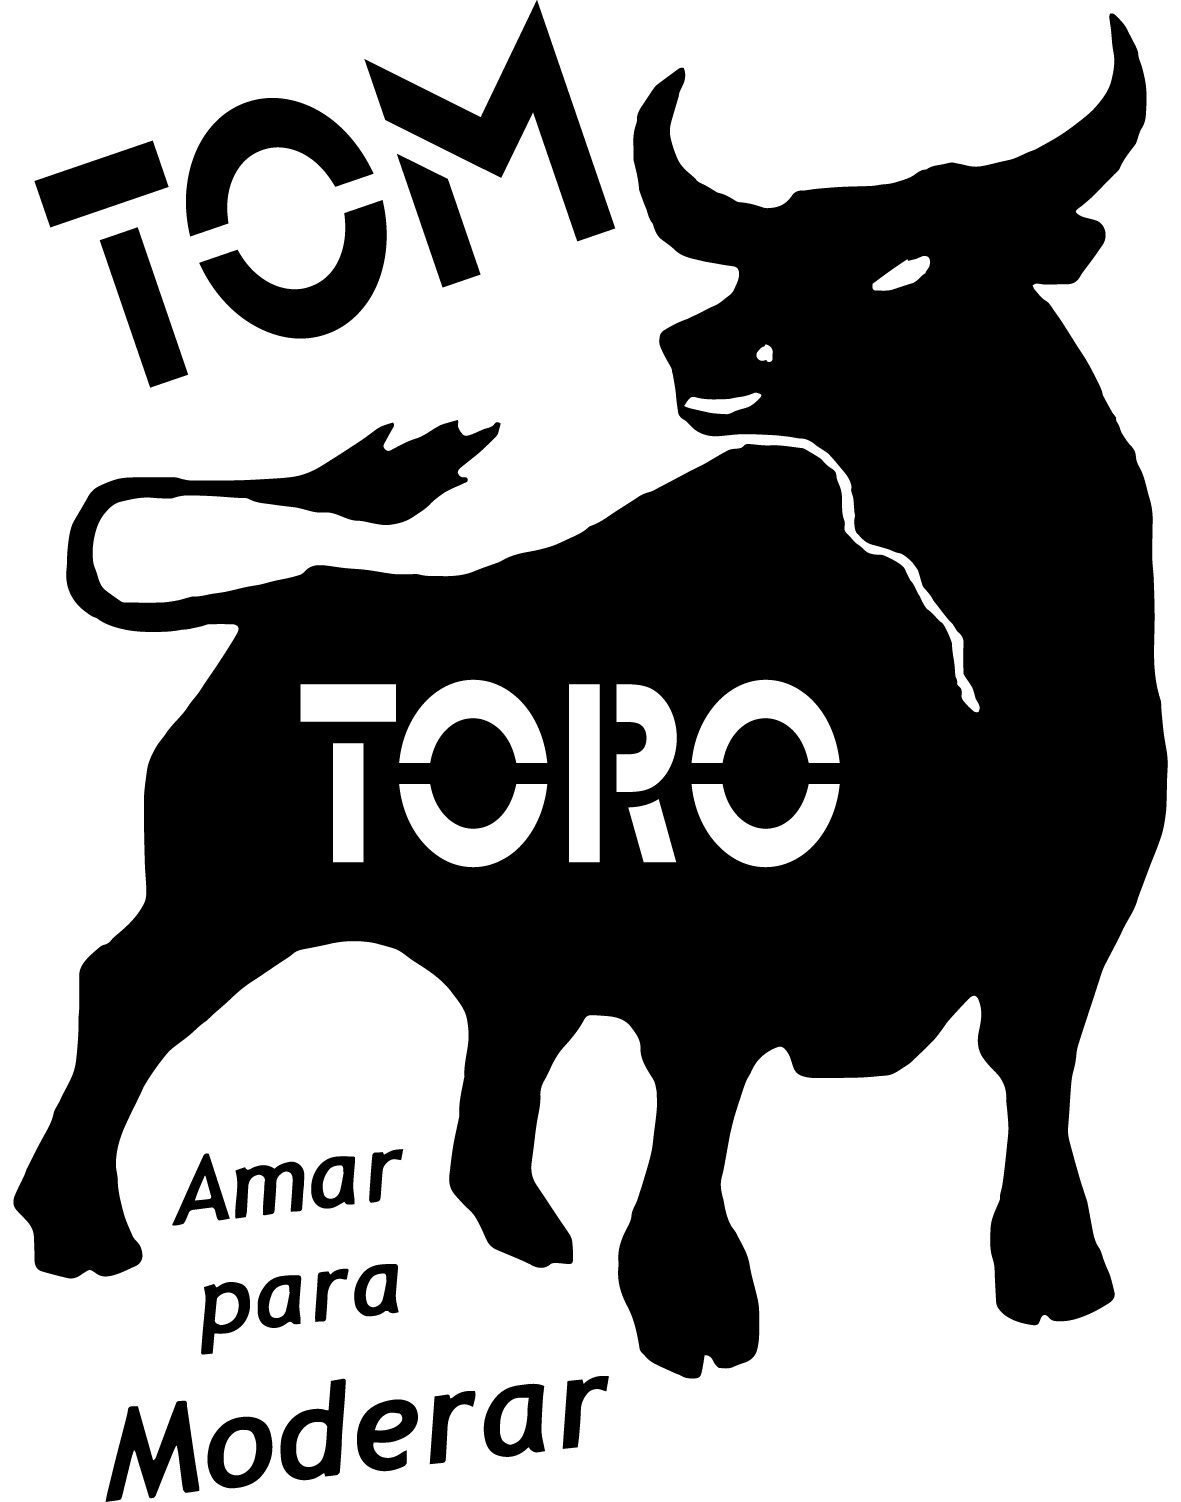 Tom Toro Karaoke